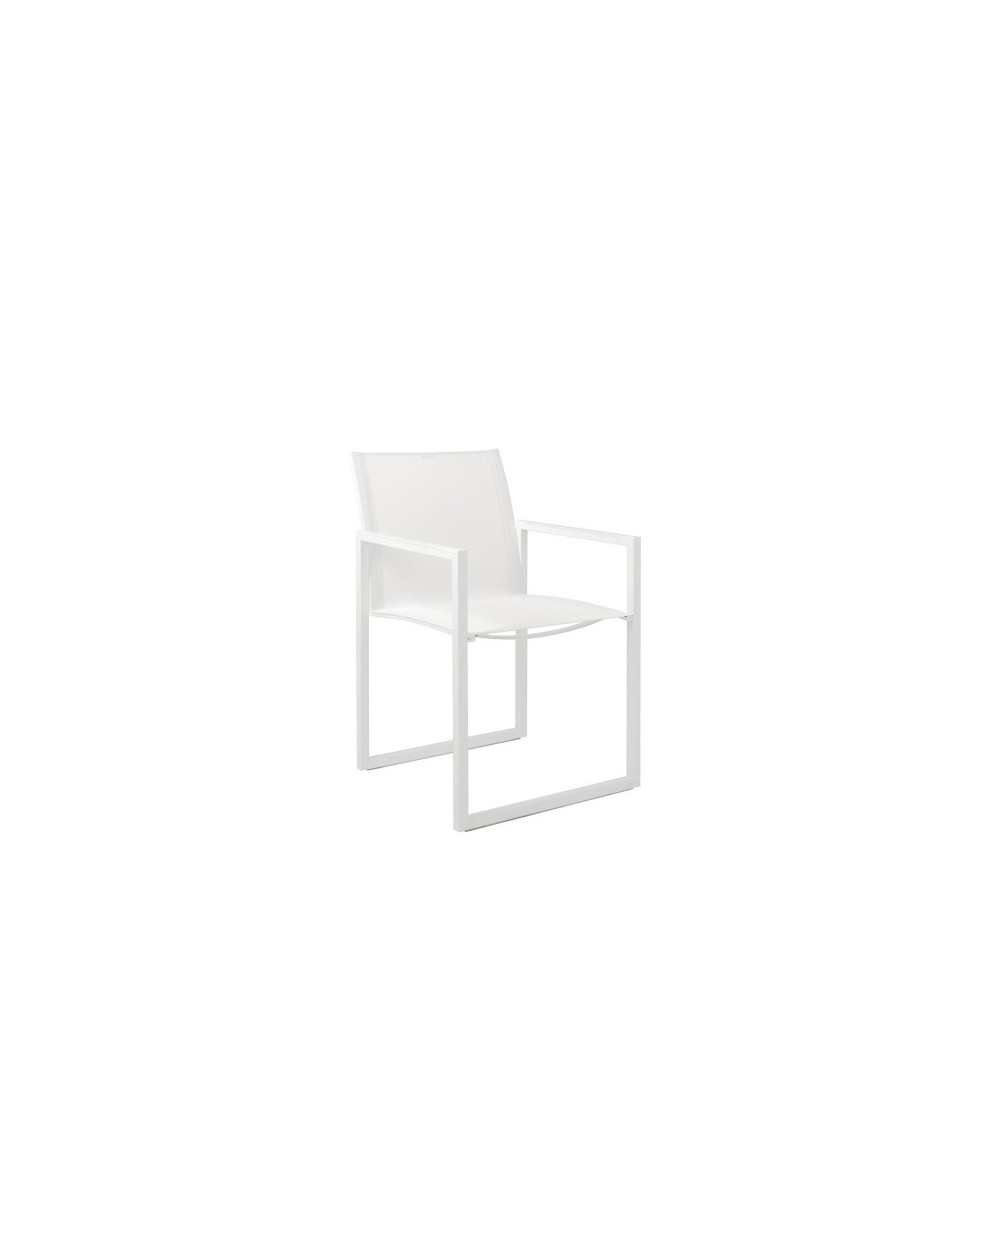 Ninix Stainless & Batyline Dining Chair - Royal Botania Royal Botania - 3